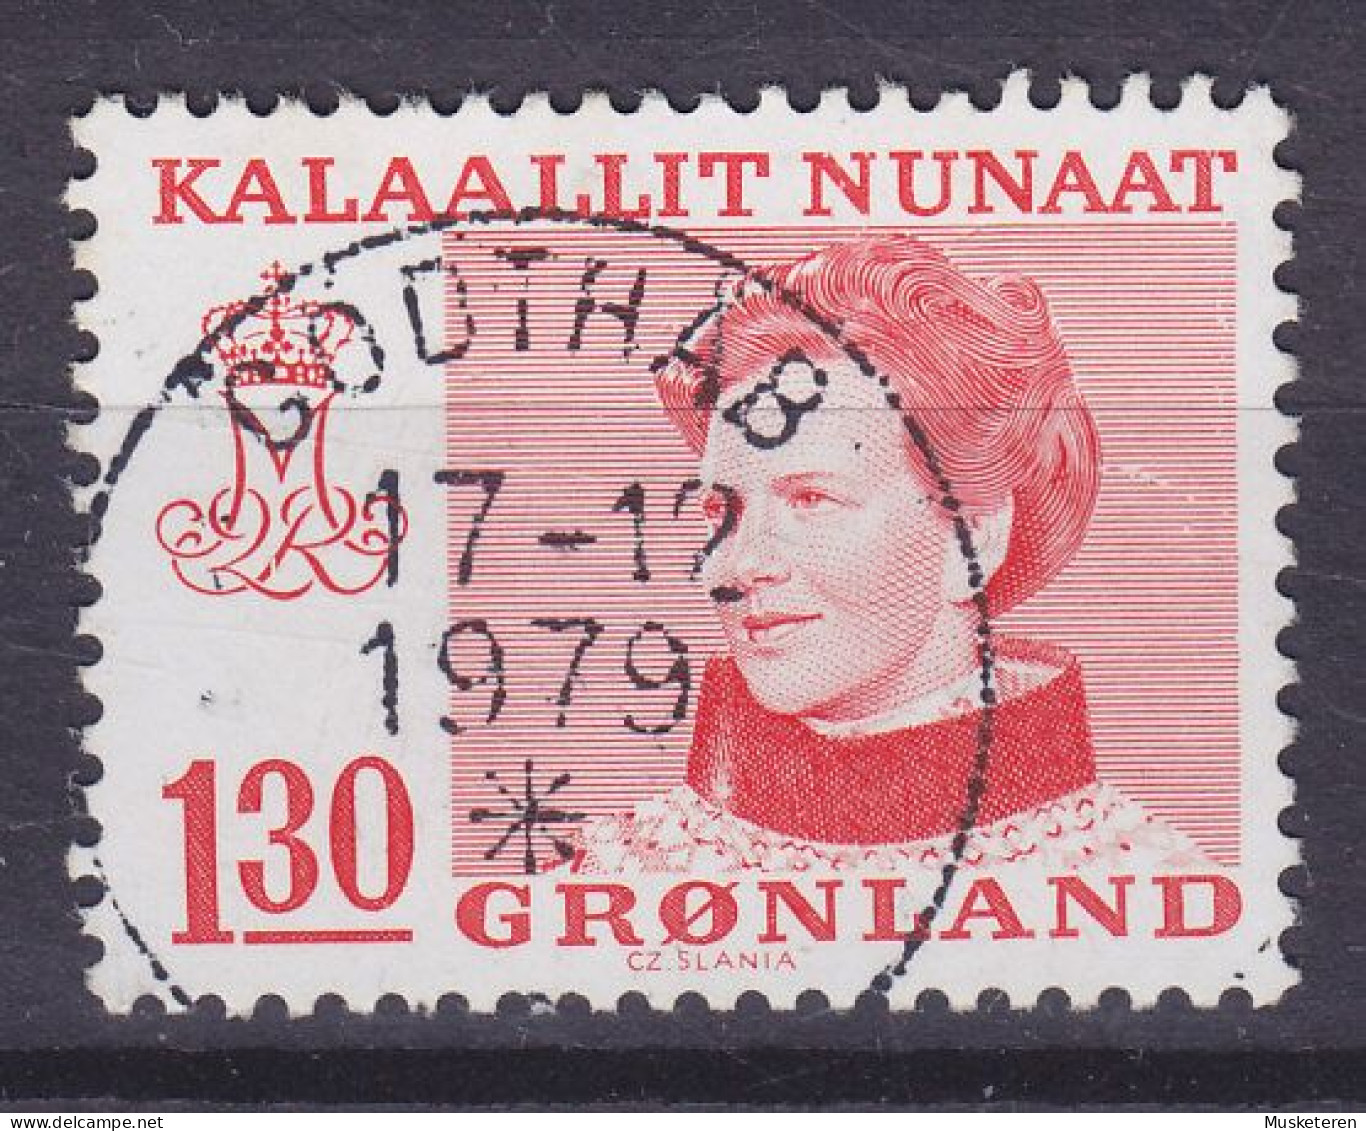 Greenland 1979 Mi. 113, 1.30 (Kr) Queen Margrethe II. (Cz. Slania) Deluxe GODTHÅB Cancel !! - Gebraucht